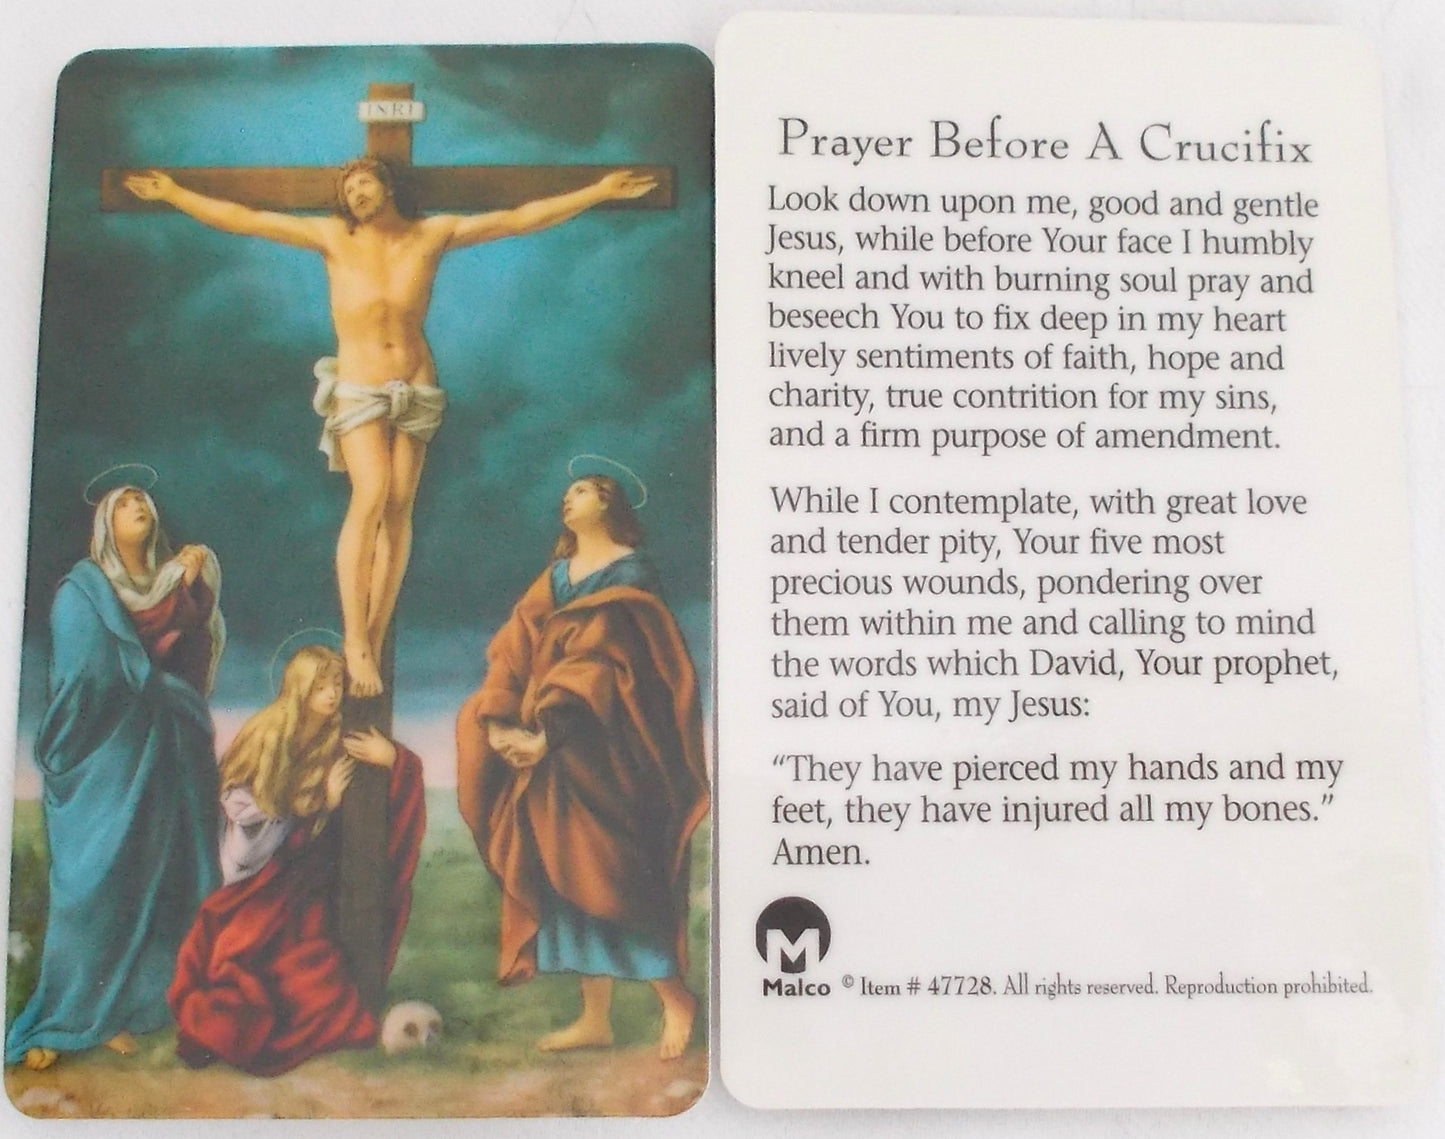 Laminated Pocket Prayercard - Prayer Before A Crucifix